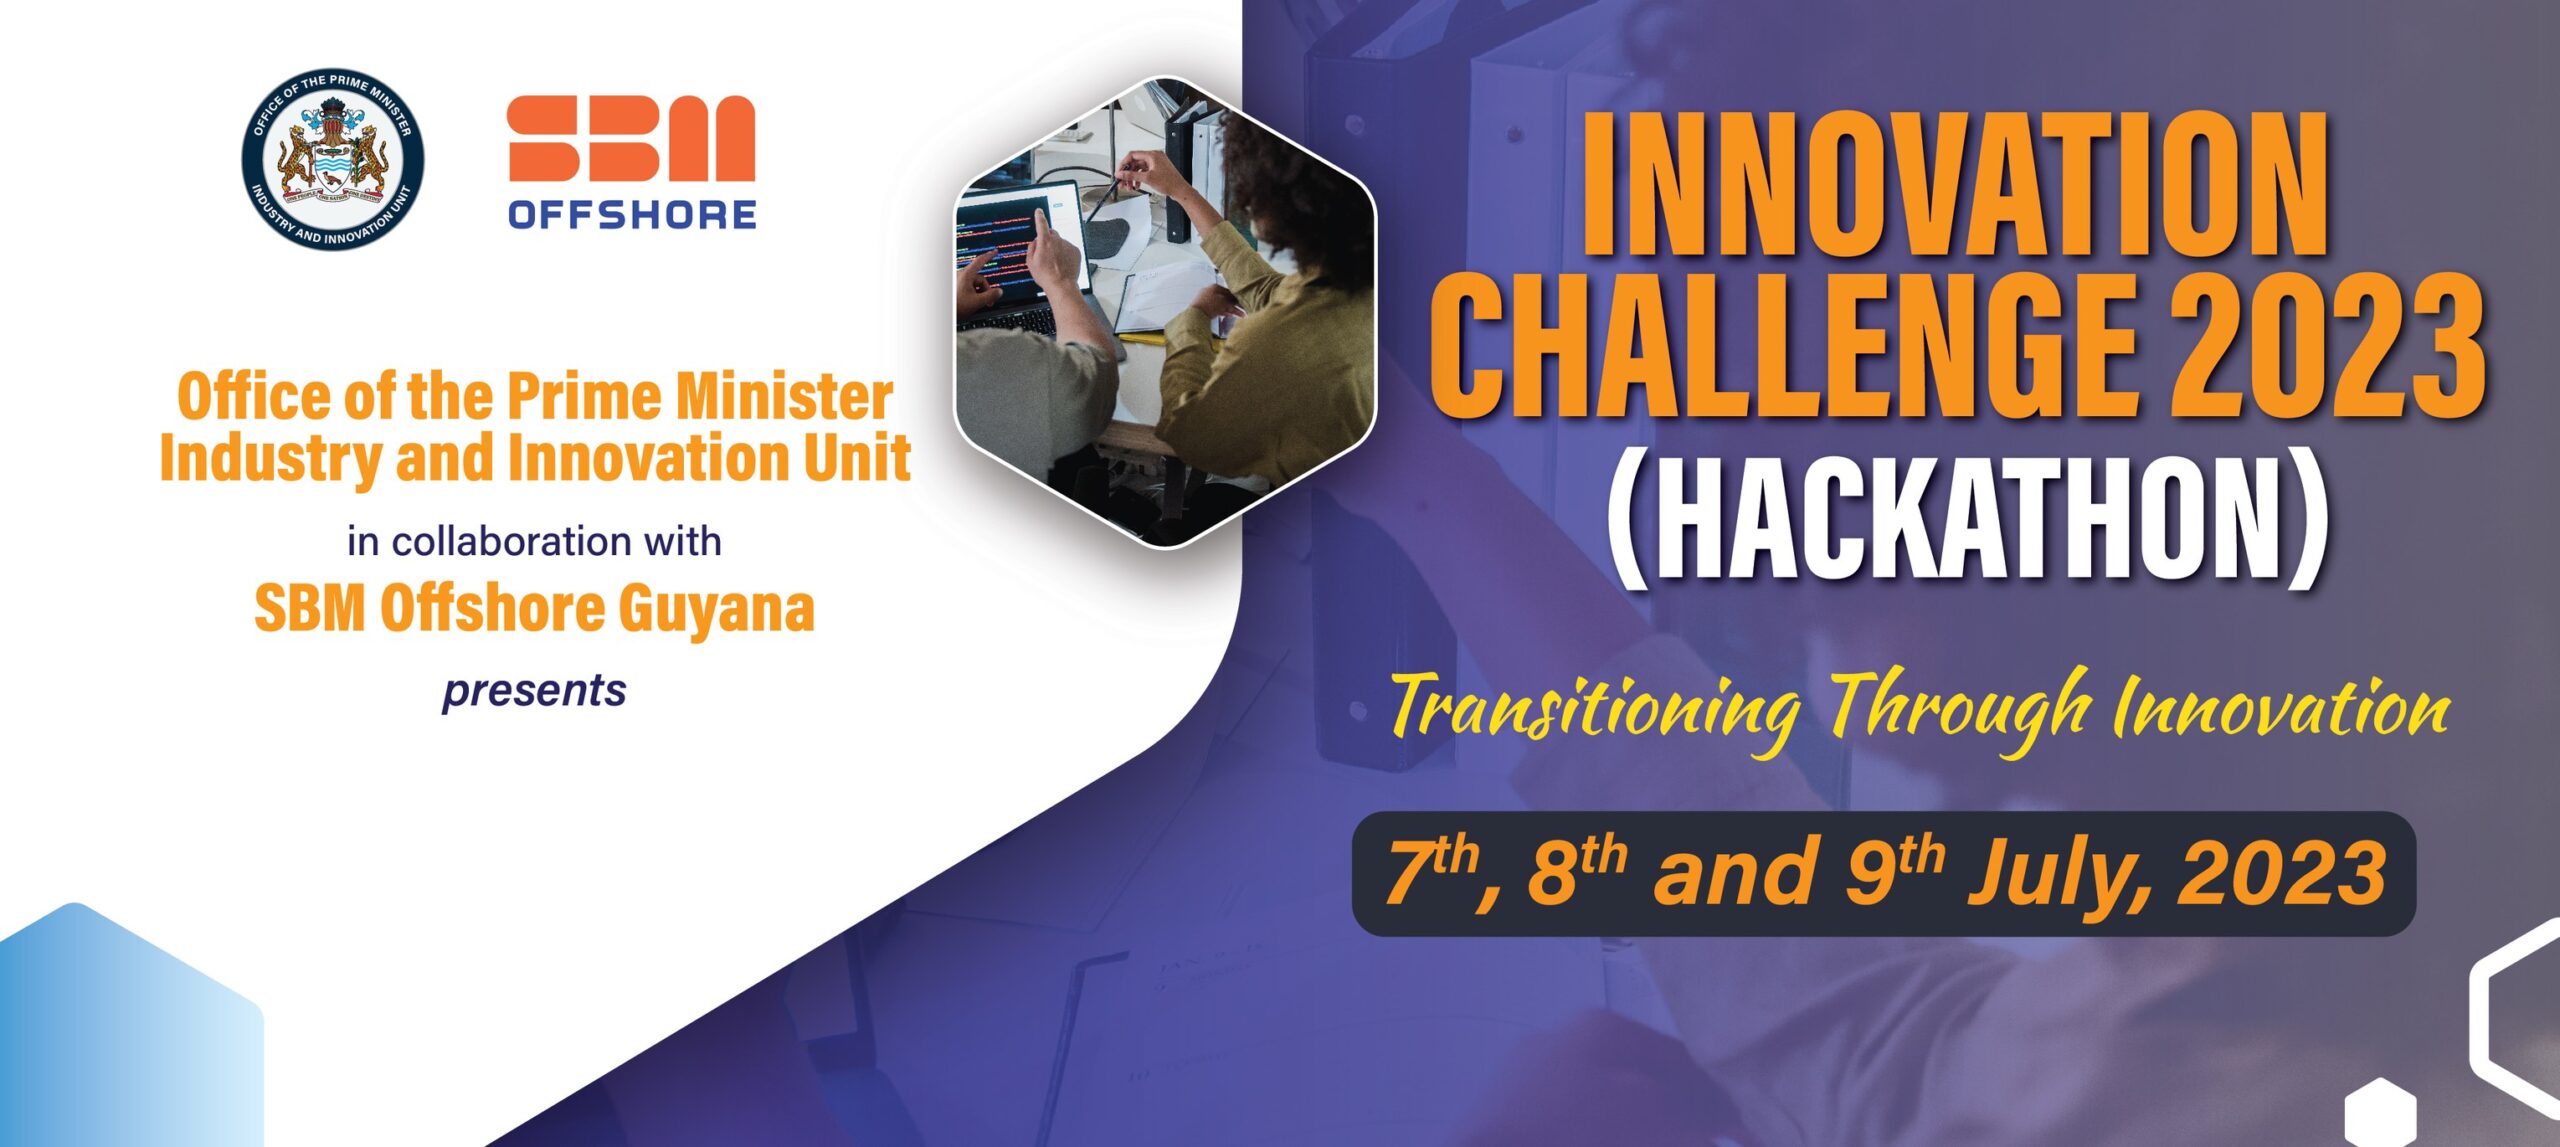 Innovation Challenge 2023! (Hackathon)